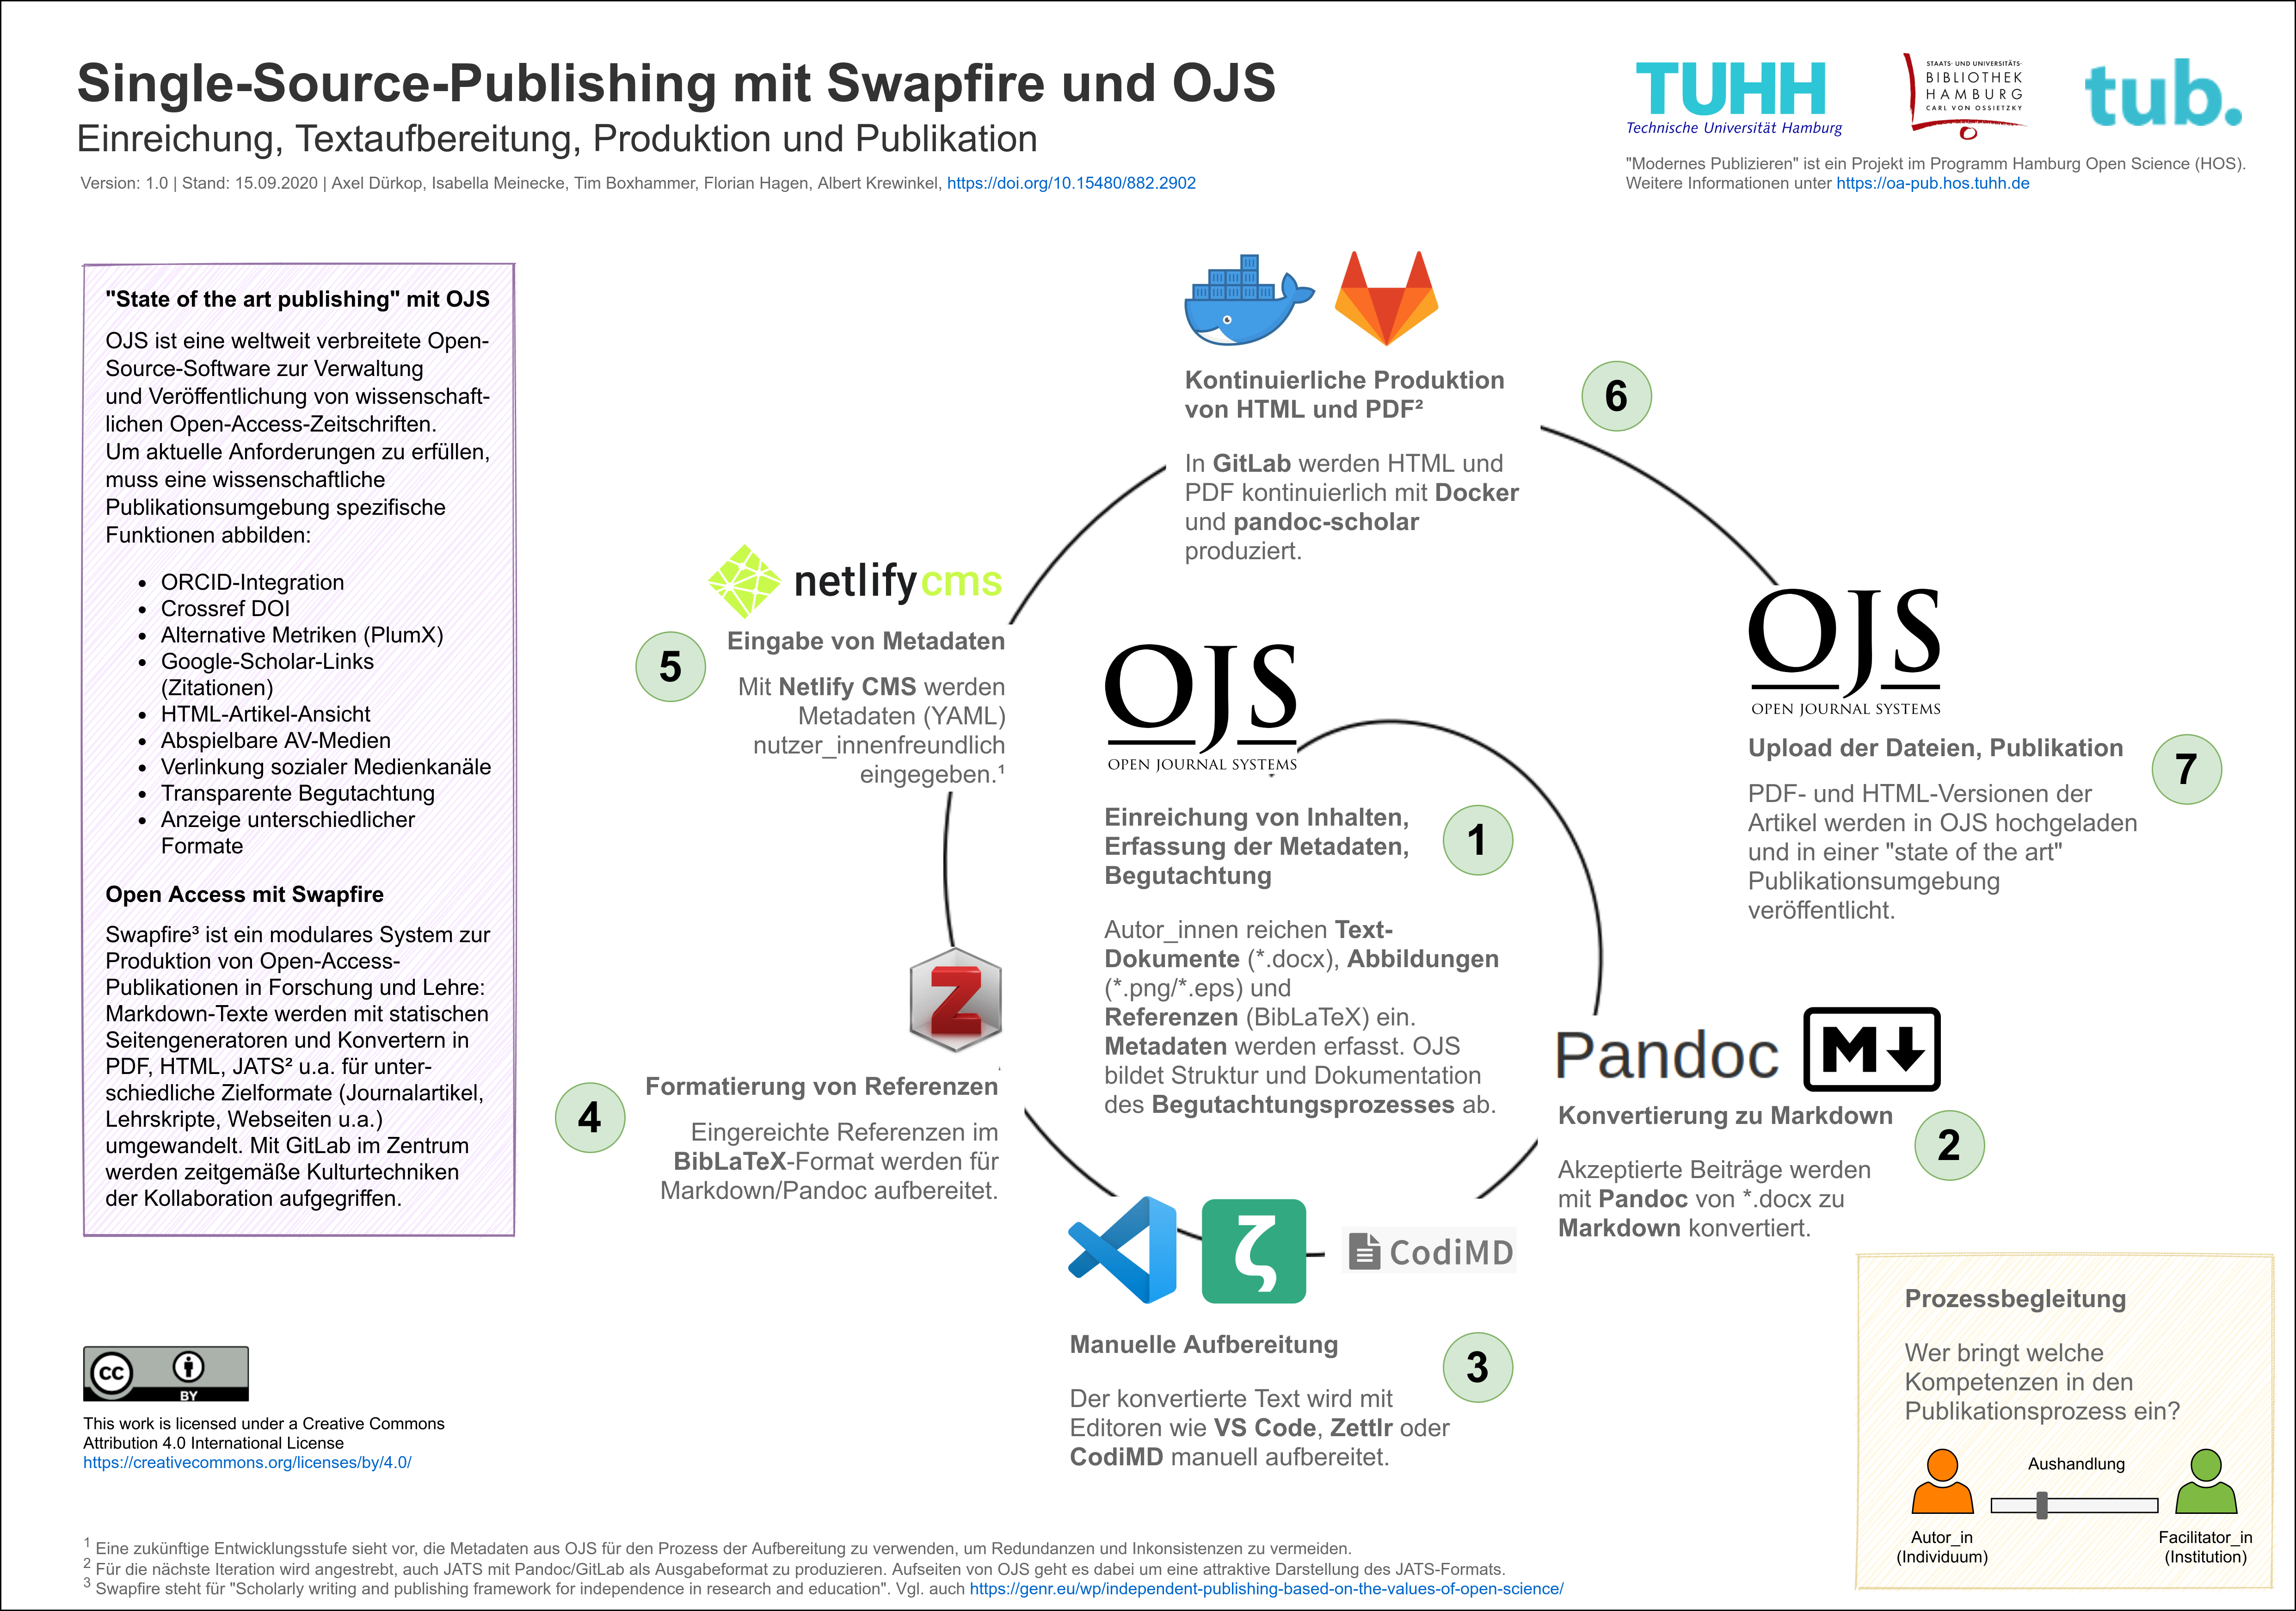 Abb. 1: Single-Source-Publishing mit Swapfire und OJS